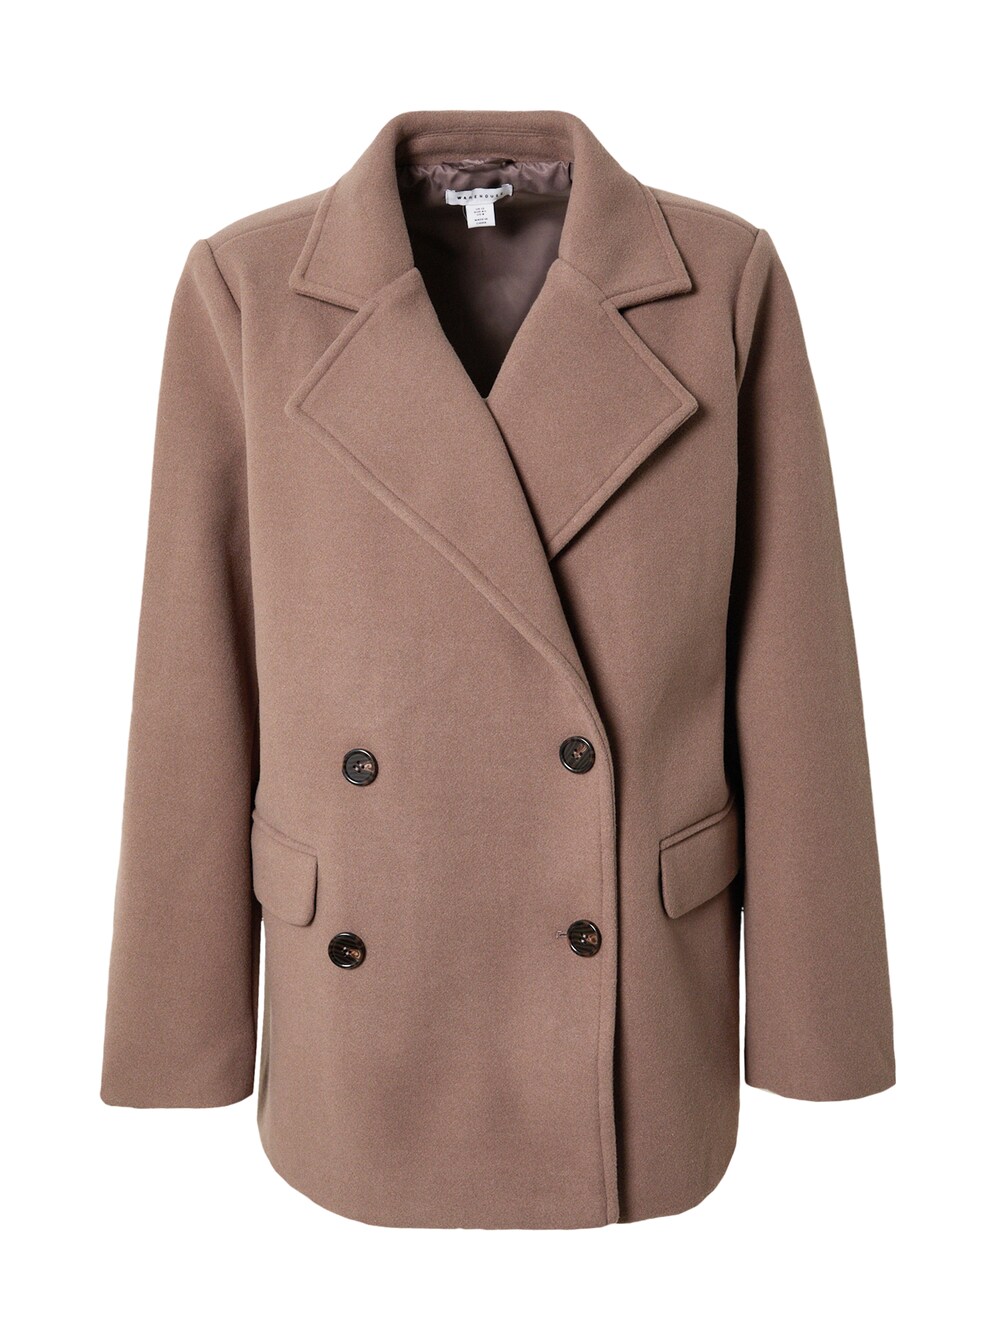 Межсезонное пальто Warehouse, коричневый межсезонное пальто warehouse нюд